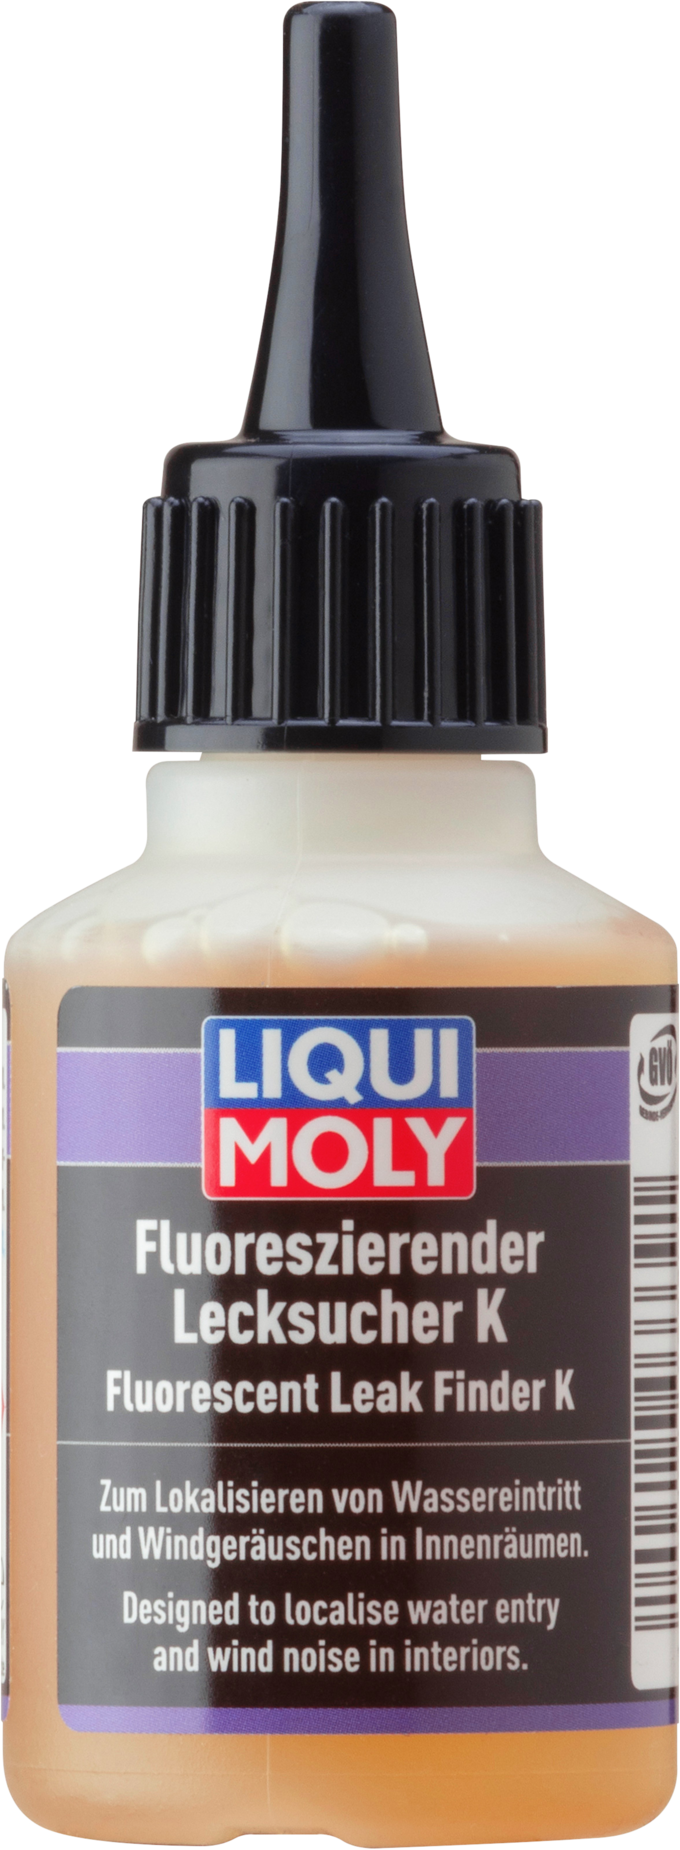 Liqui Moly Fluorescerende Lekzoeker K, 50 ml